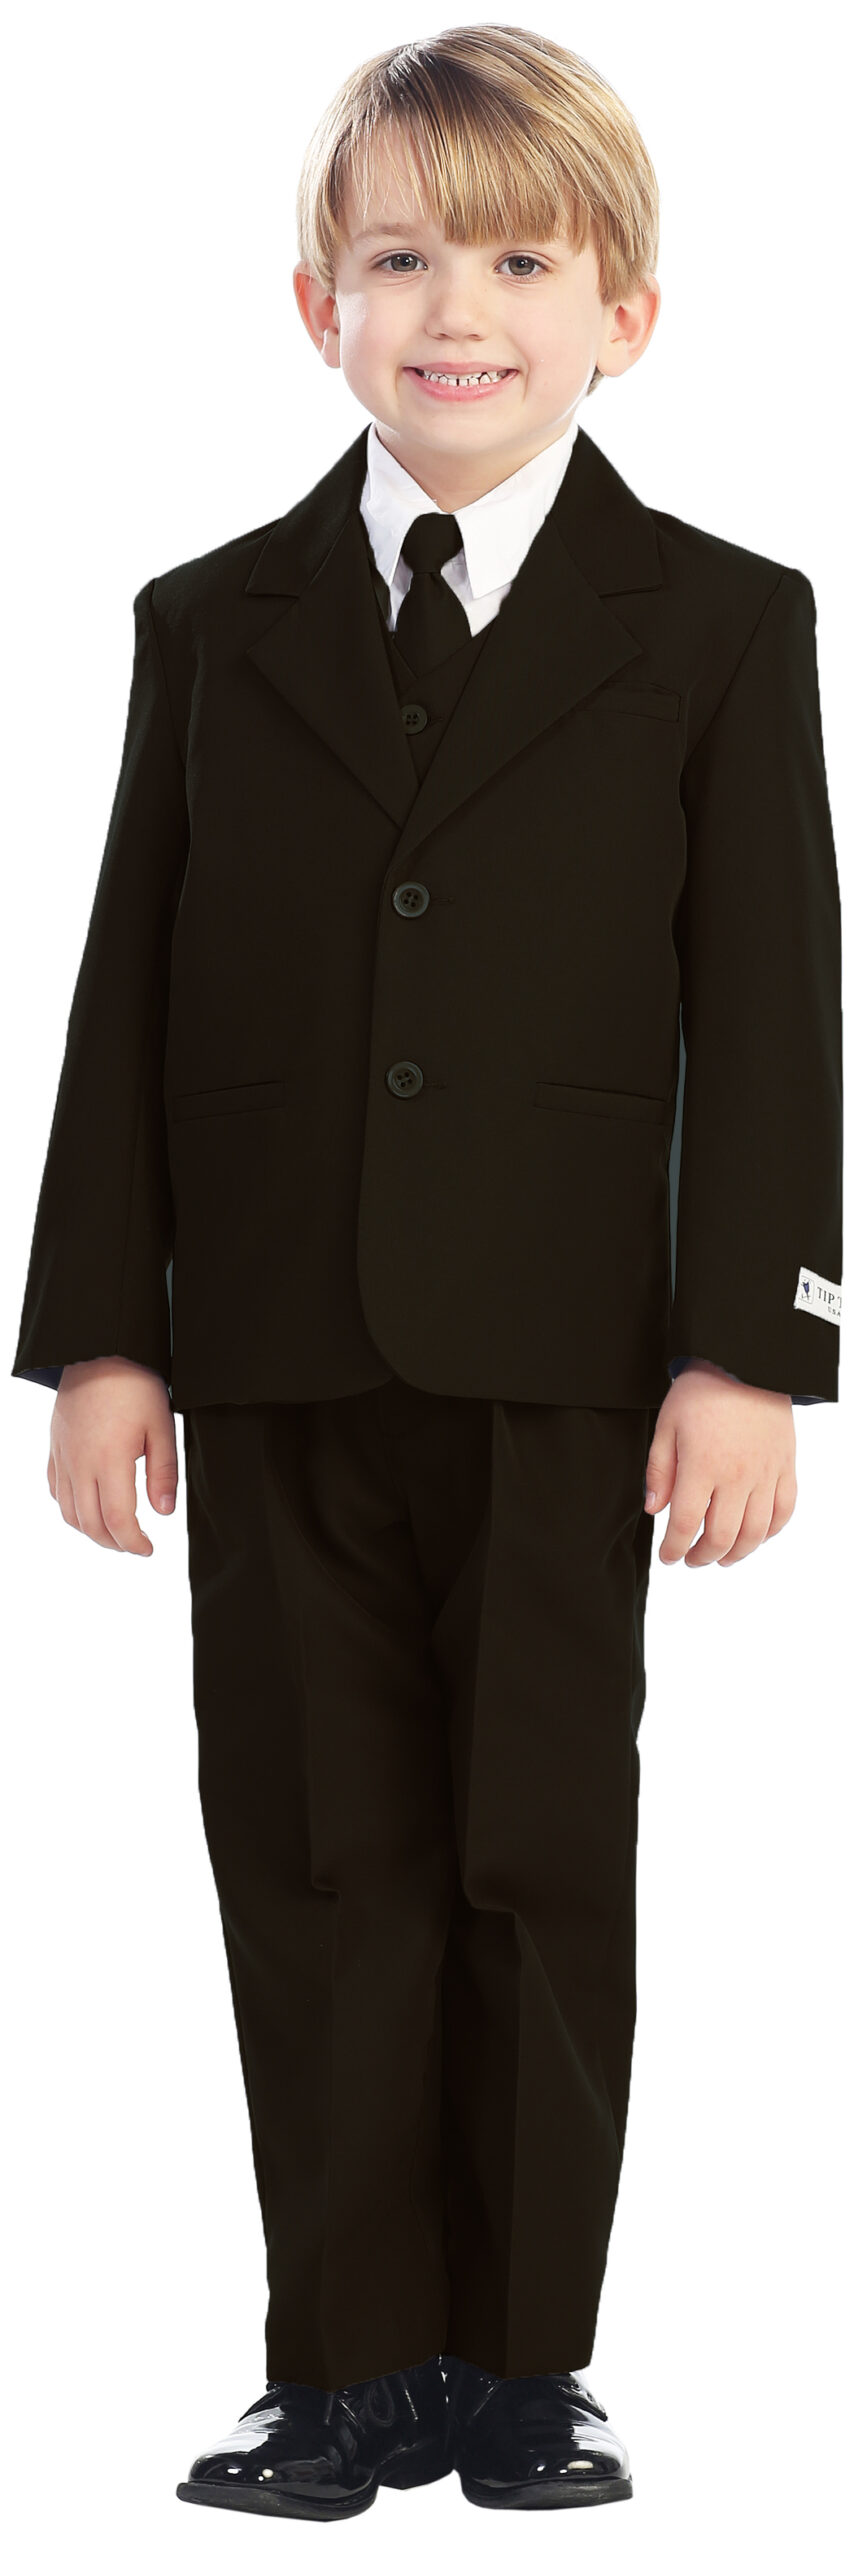 Avery Hill 5-Piece Boy's 2-Button Dress Suit Full-Back Vest - Brown Size 14